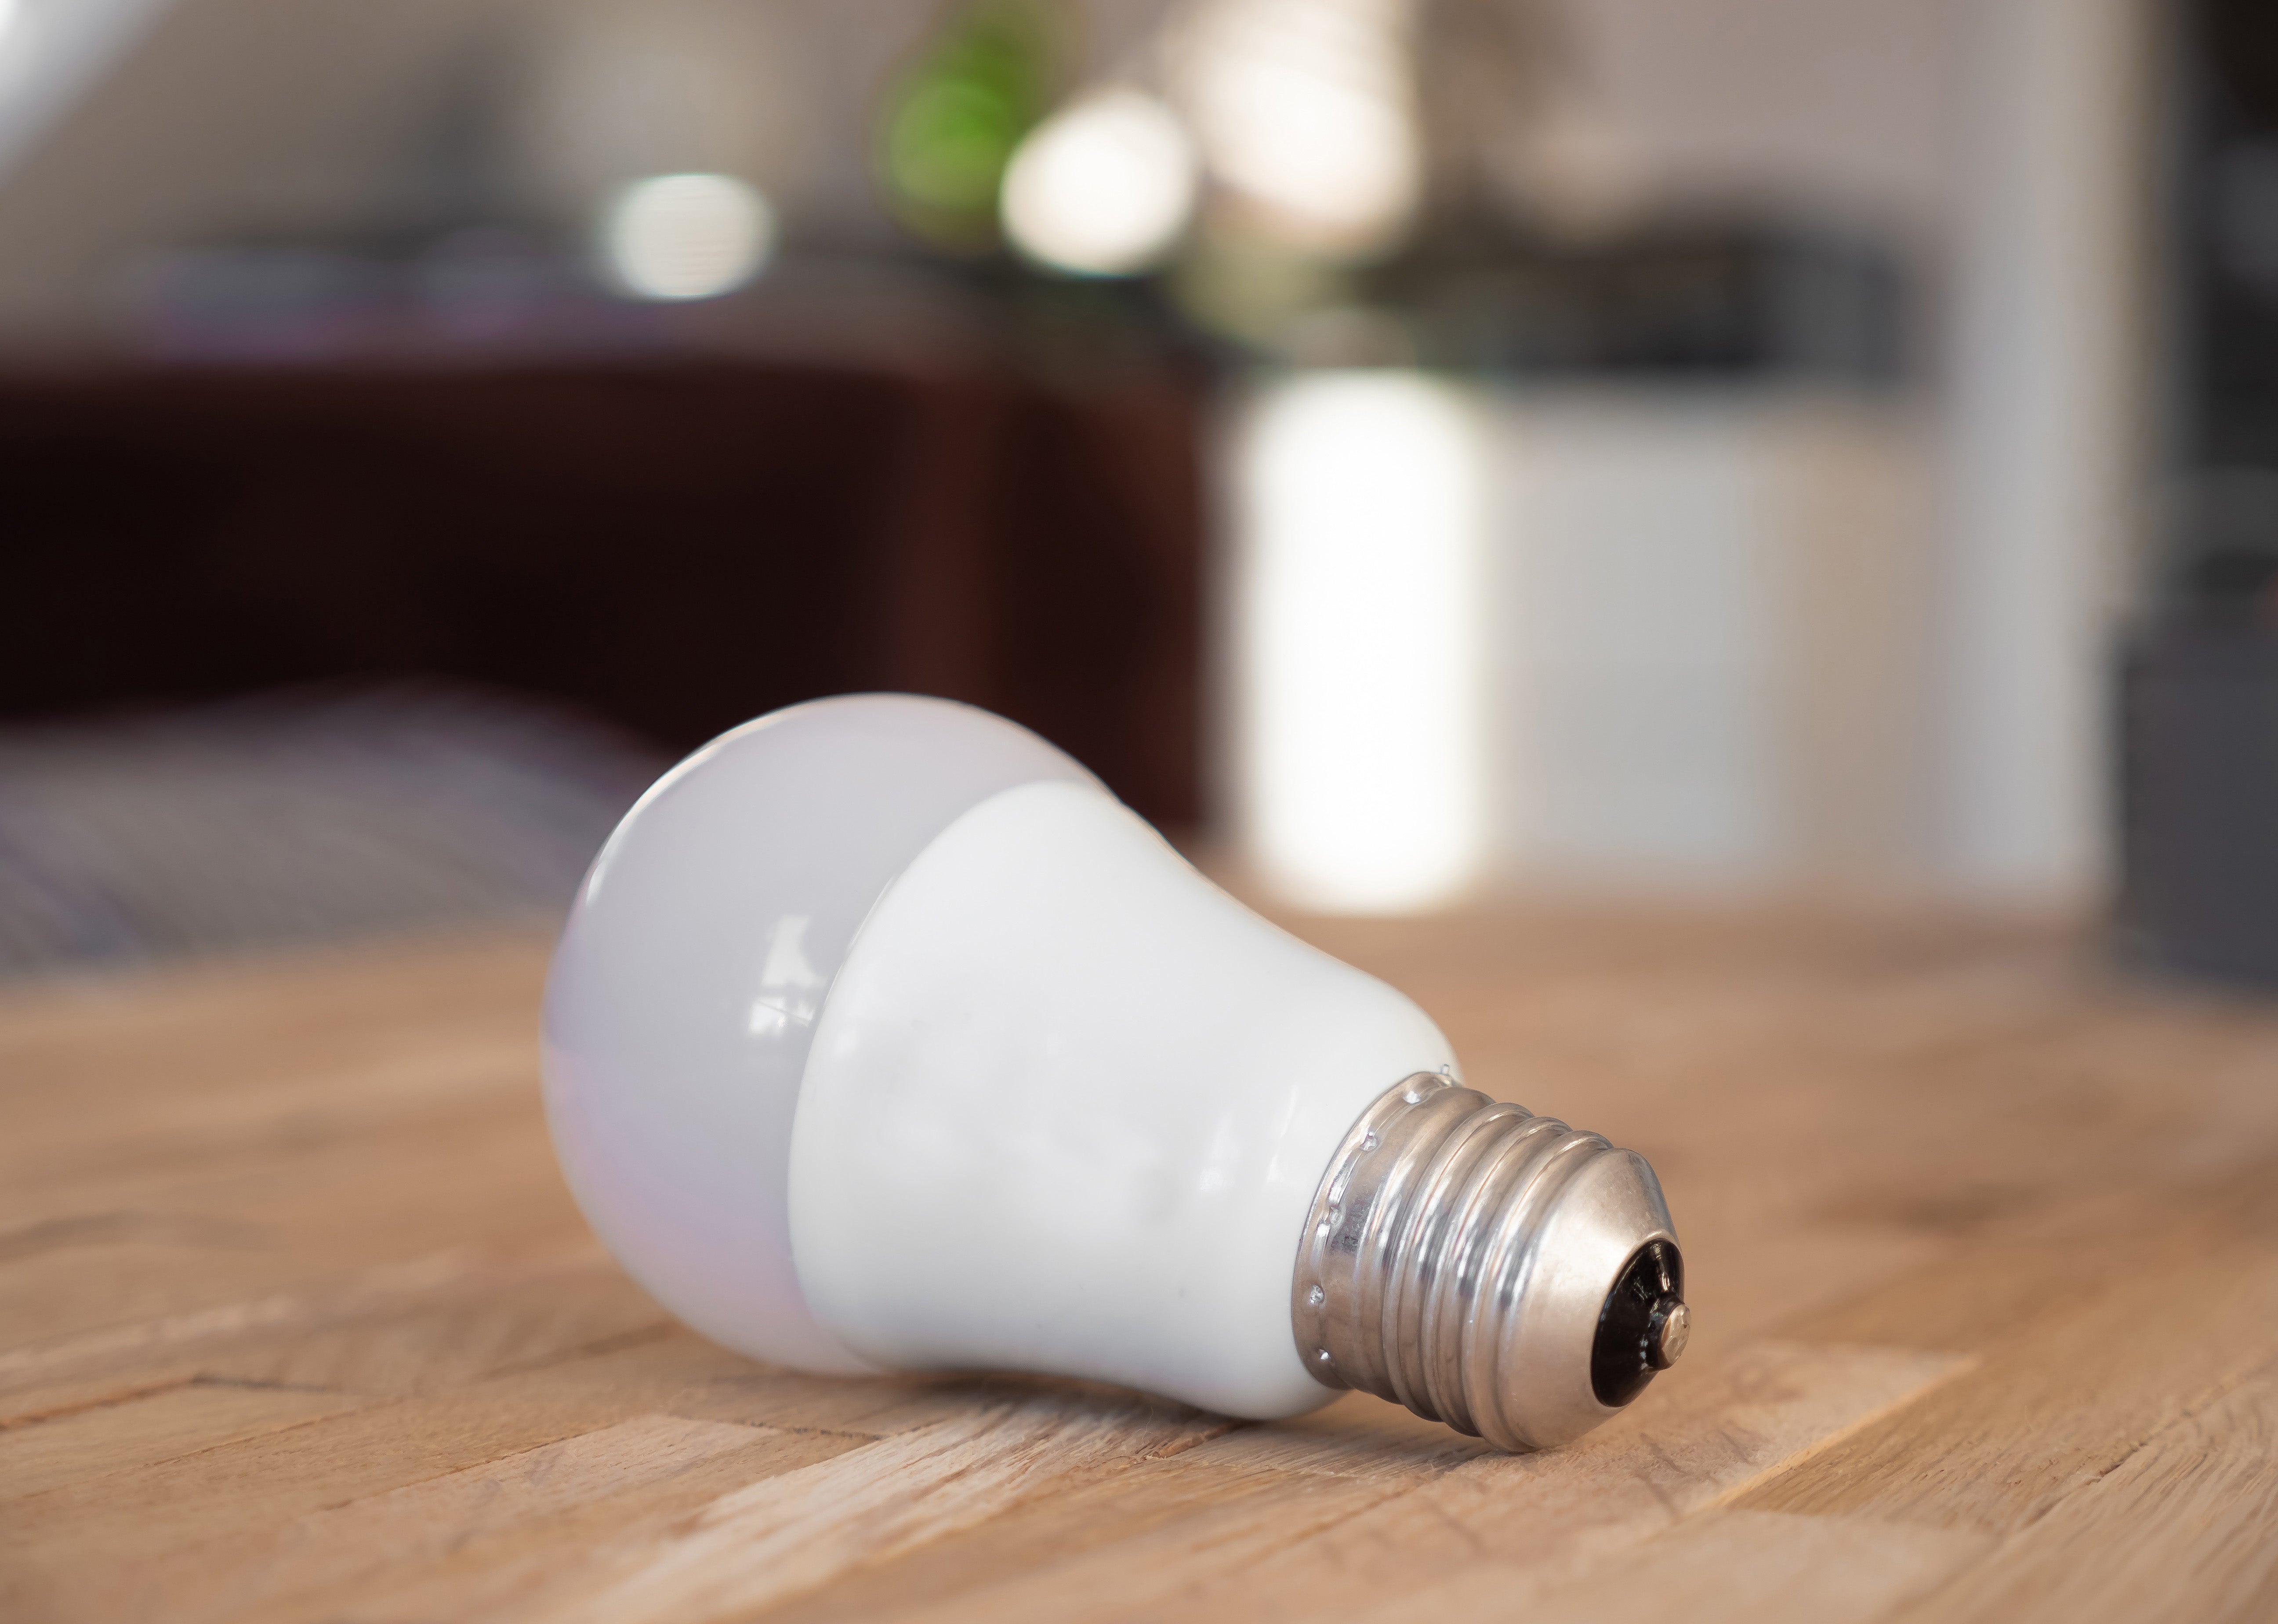 Smart light bulb on table